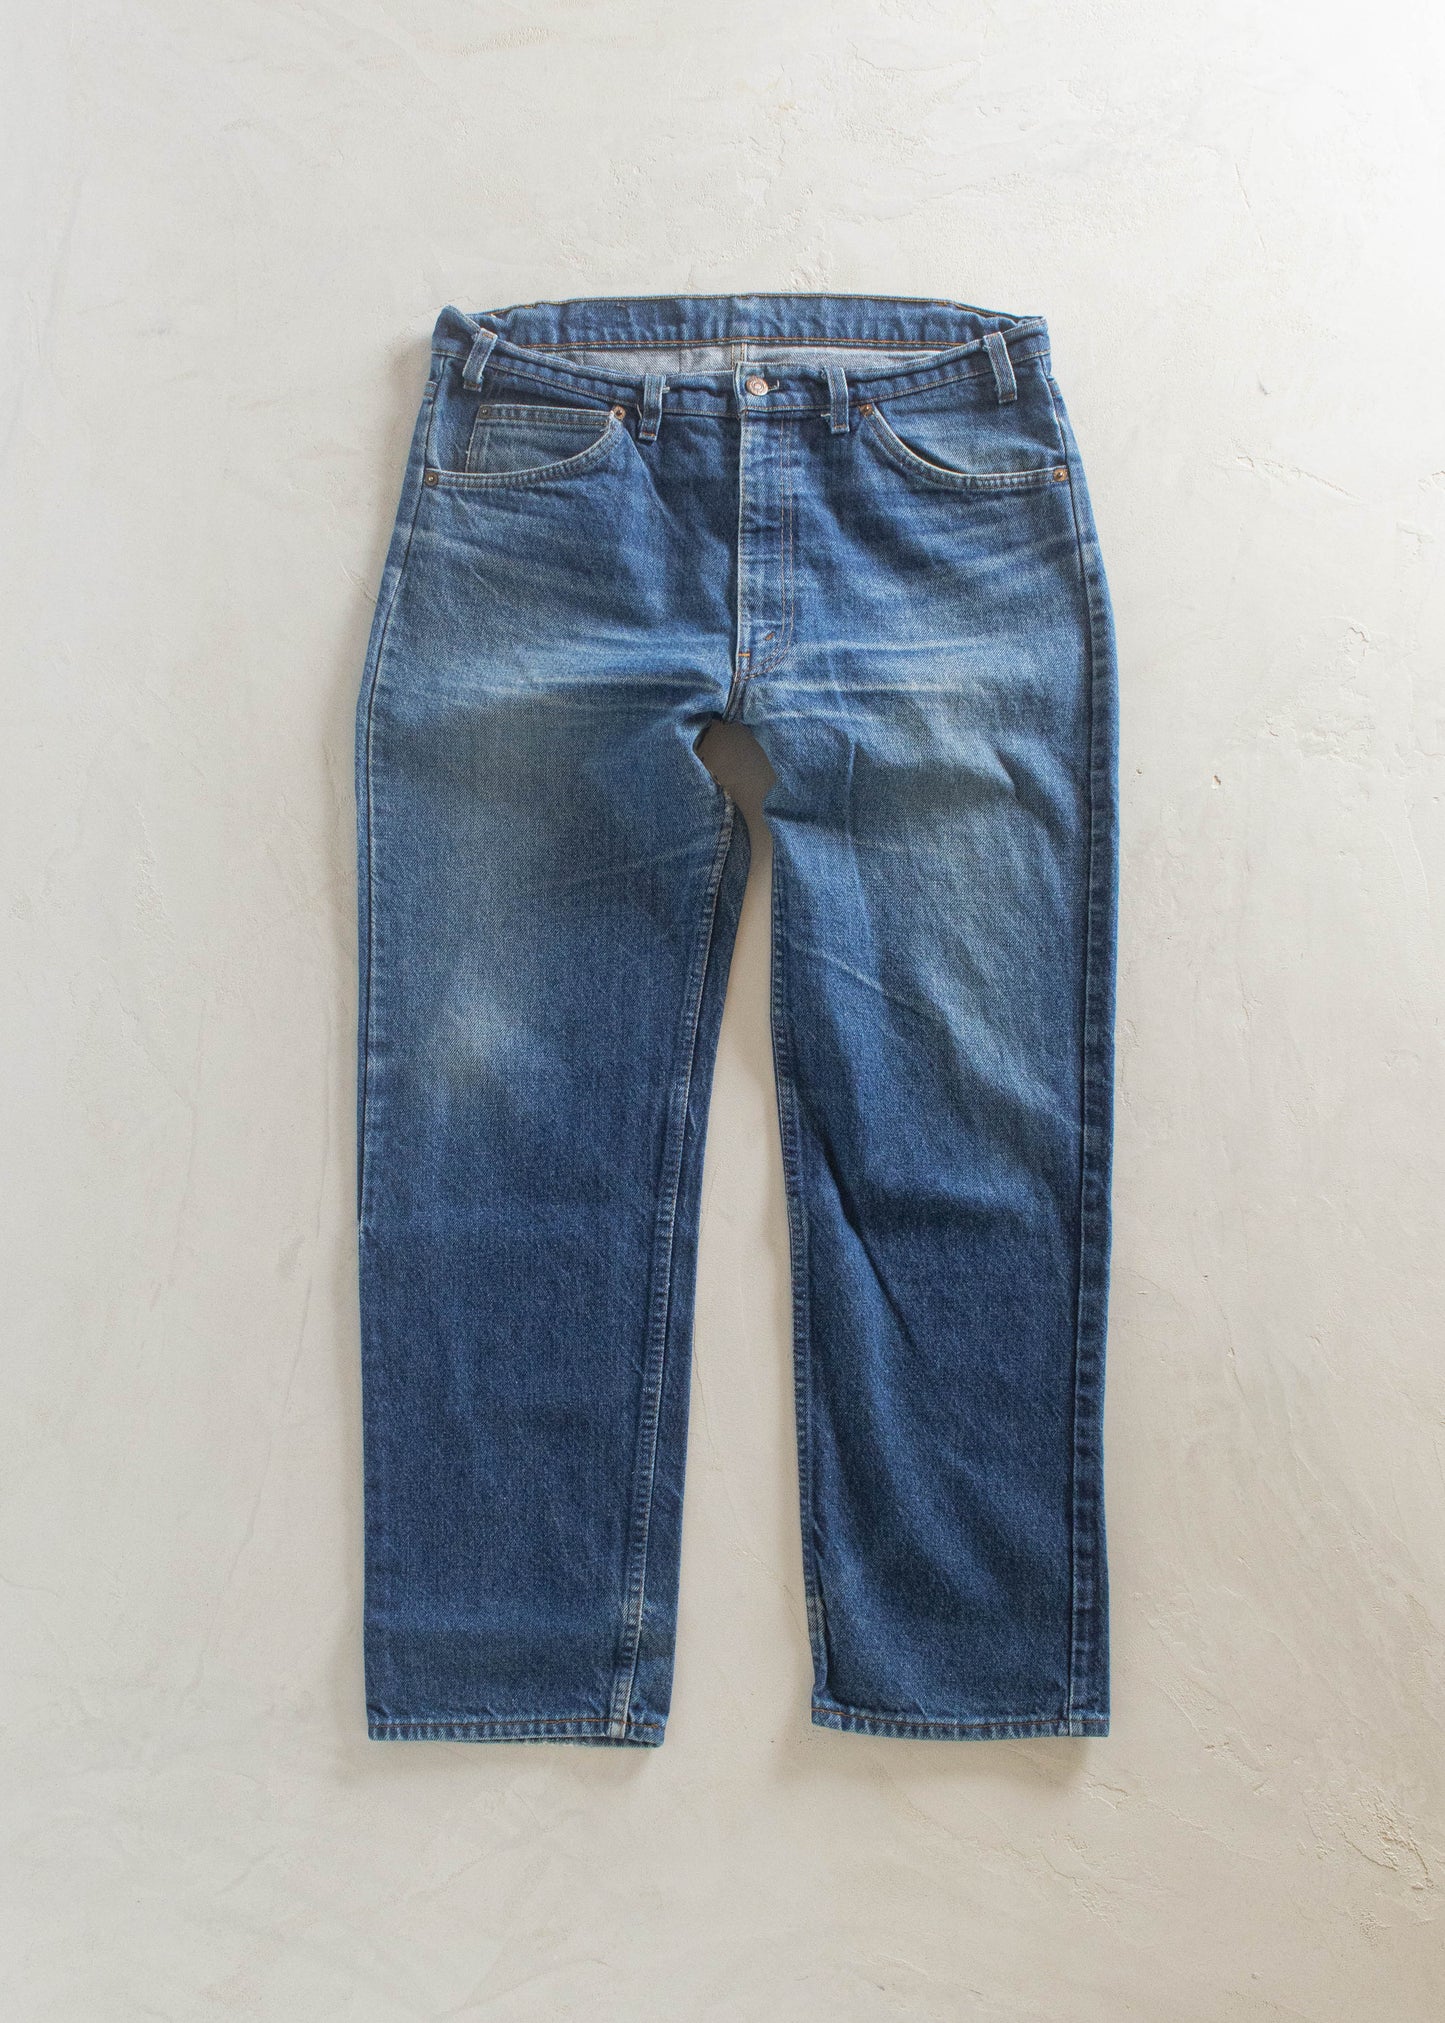 1980s Levi's 505 Orange Tab Darkwash Jeans Size Women's 32 Men's 34